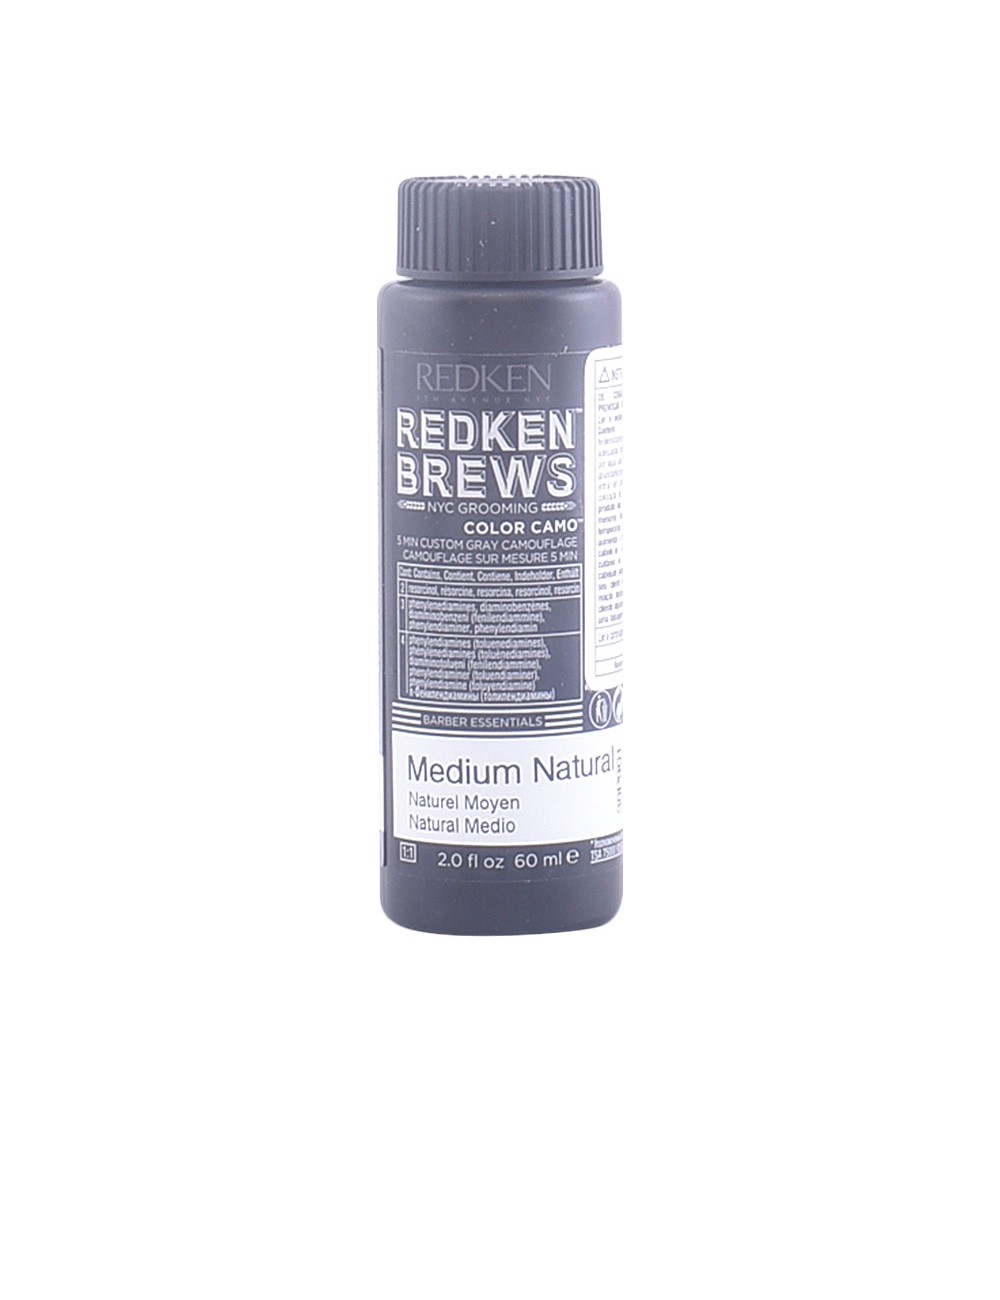 REDKEN BREWS color camo 5N-medium natural 60 ml